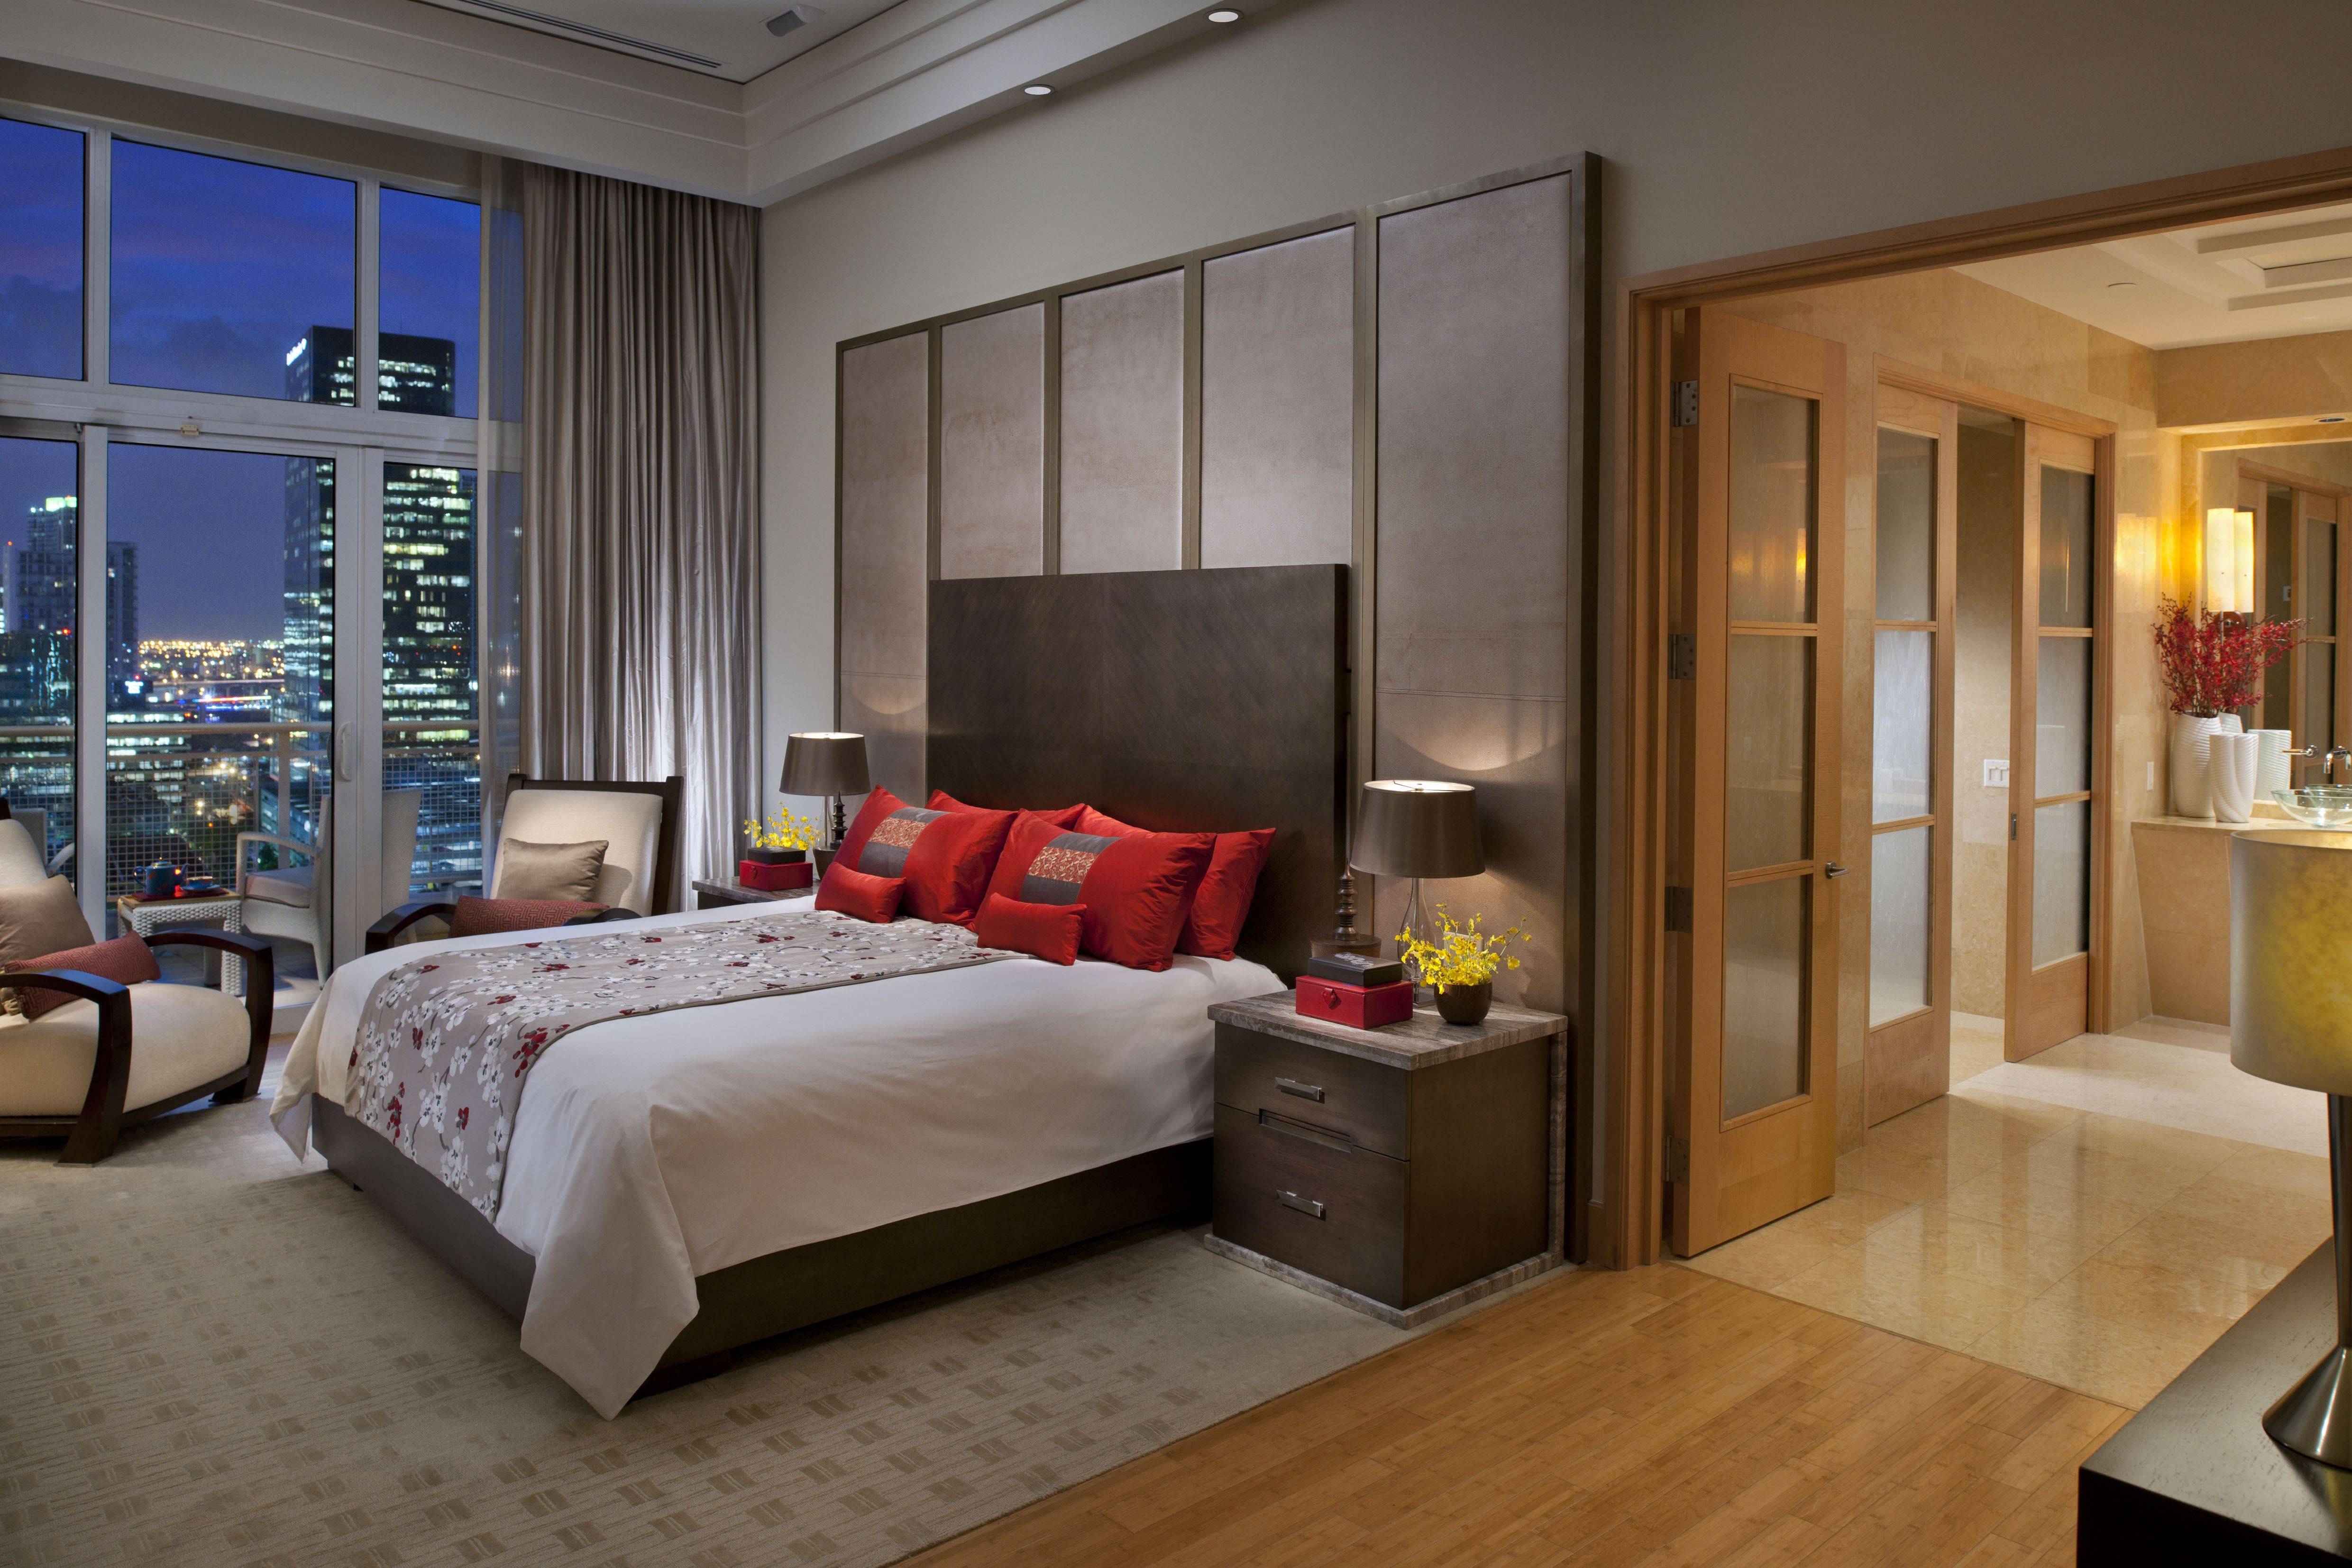 The best home com. Отель Mandarin oriental Miami. Красивая квартира спальня. Красивая комната. Спа комнаты.